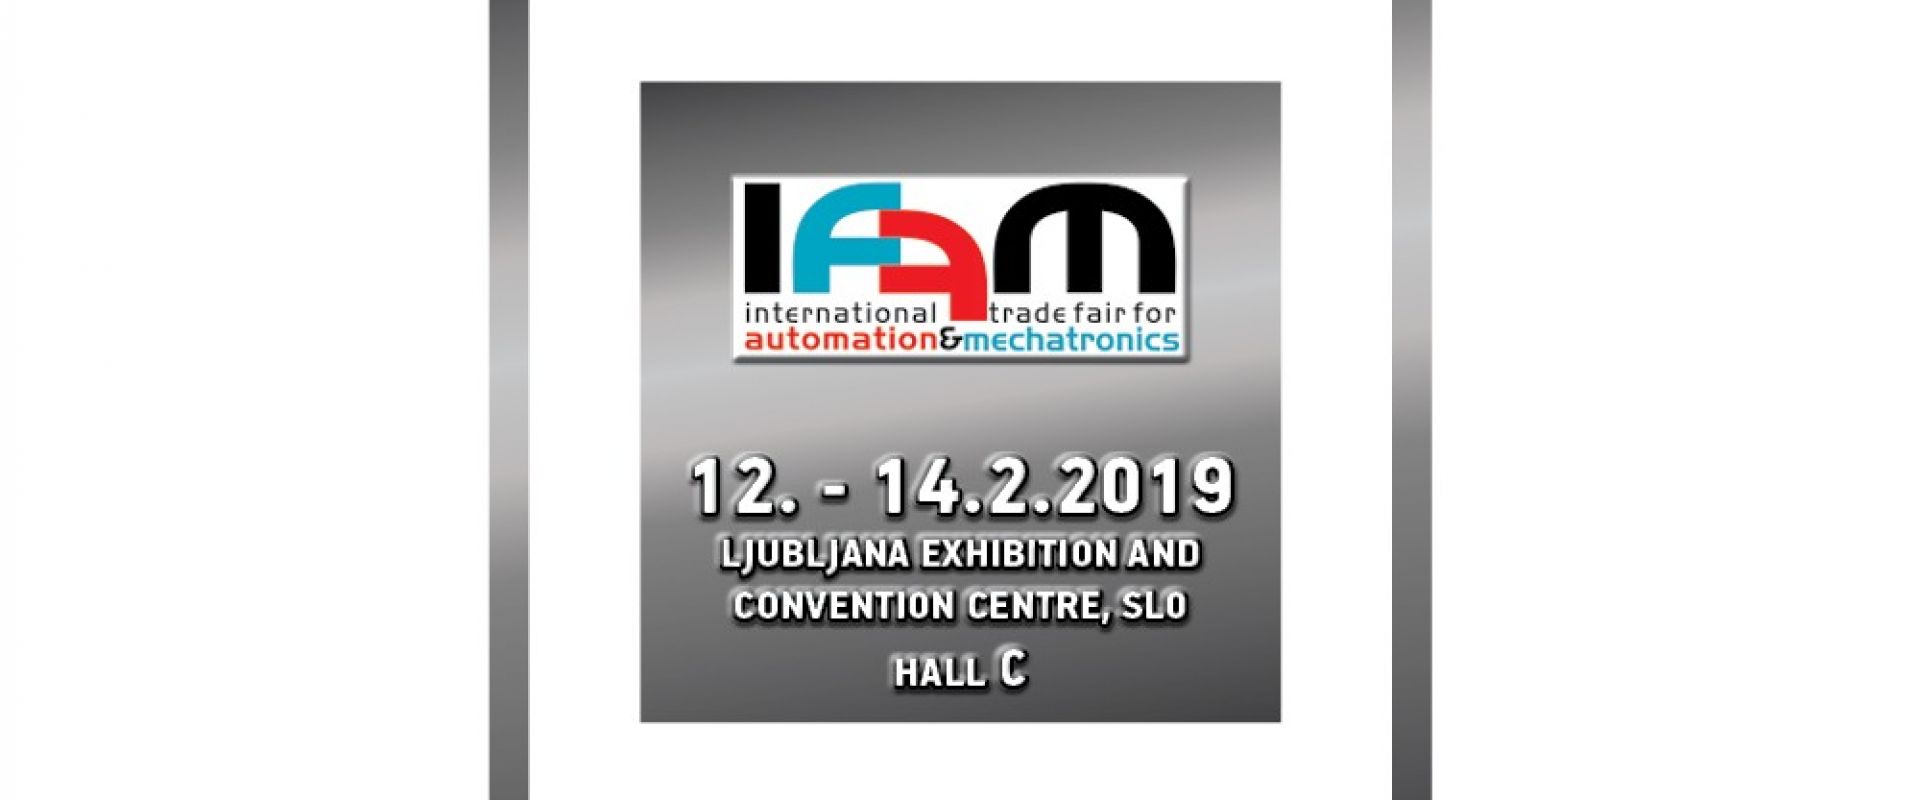 IFAM 2019 – International Trade Fair for Automation&Mechatronics